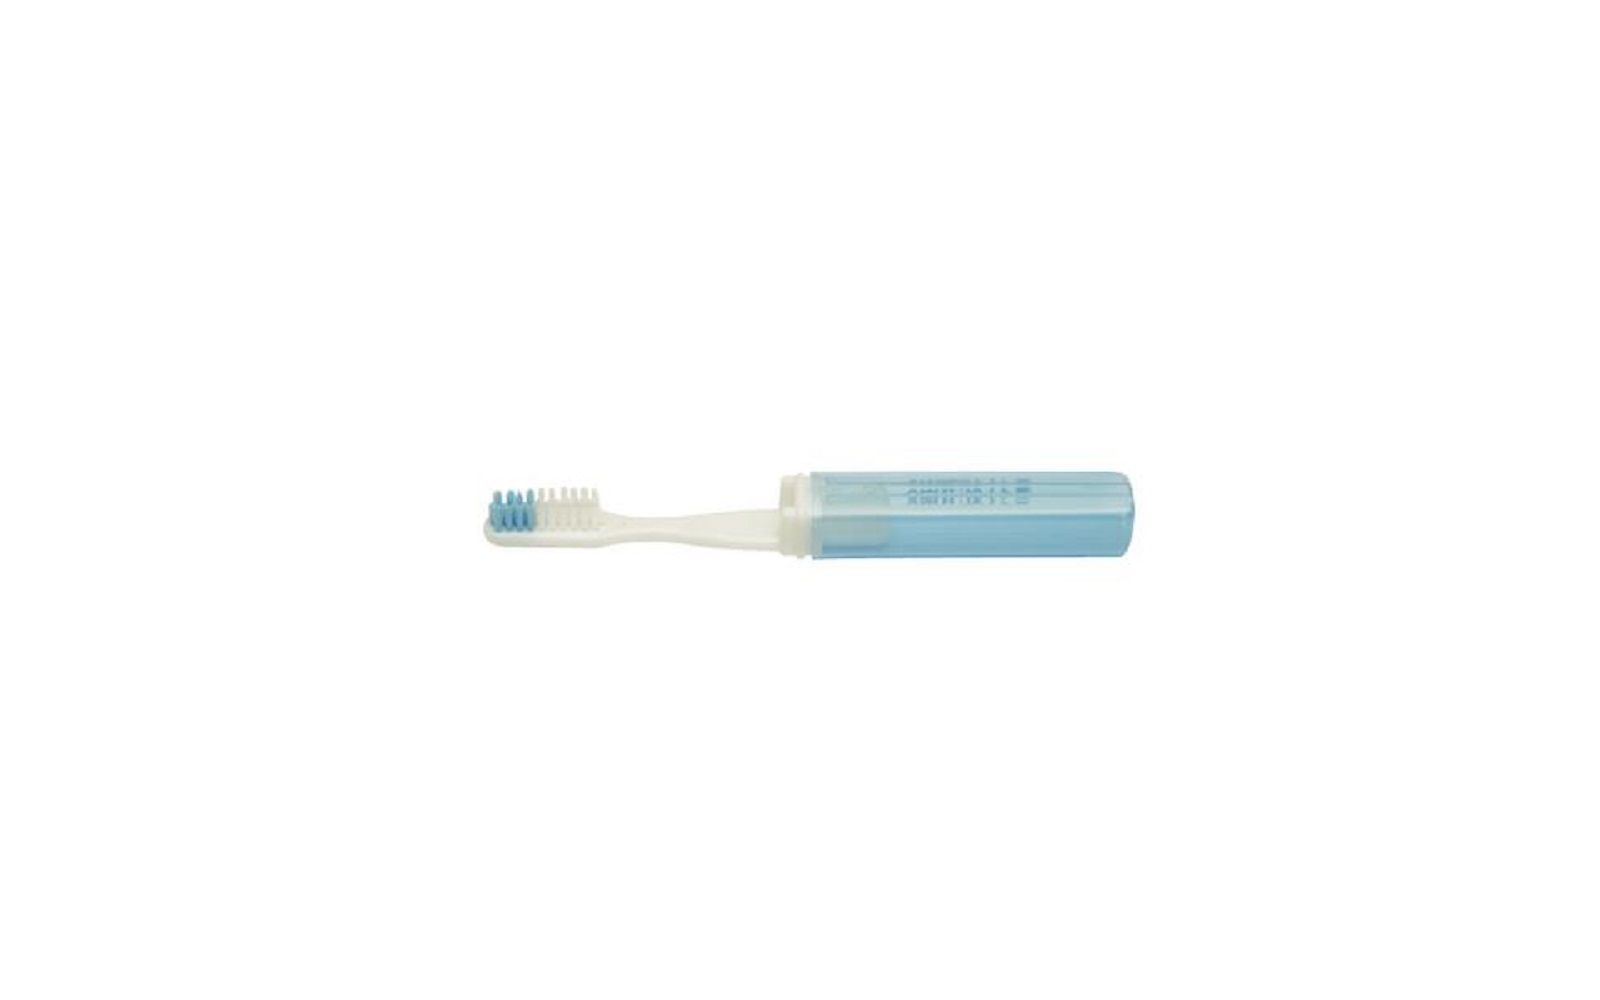 Ortho travel toothbrush – #c222, 12/pkg